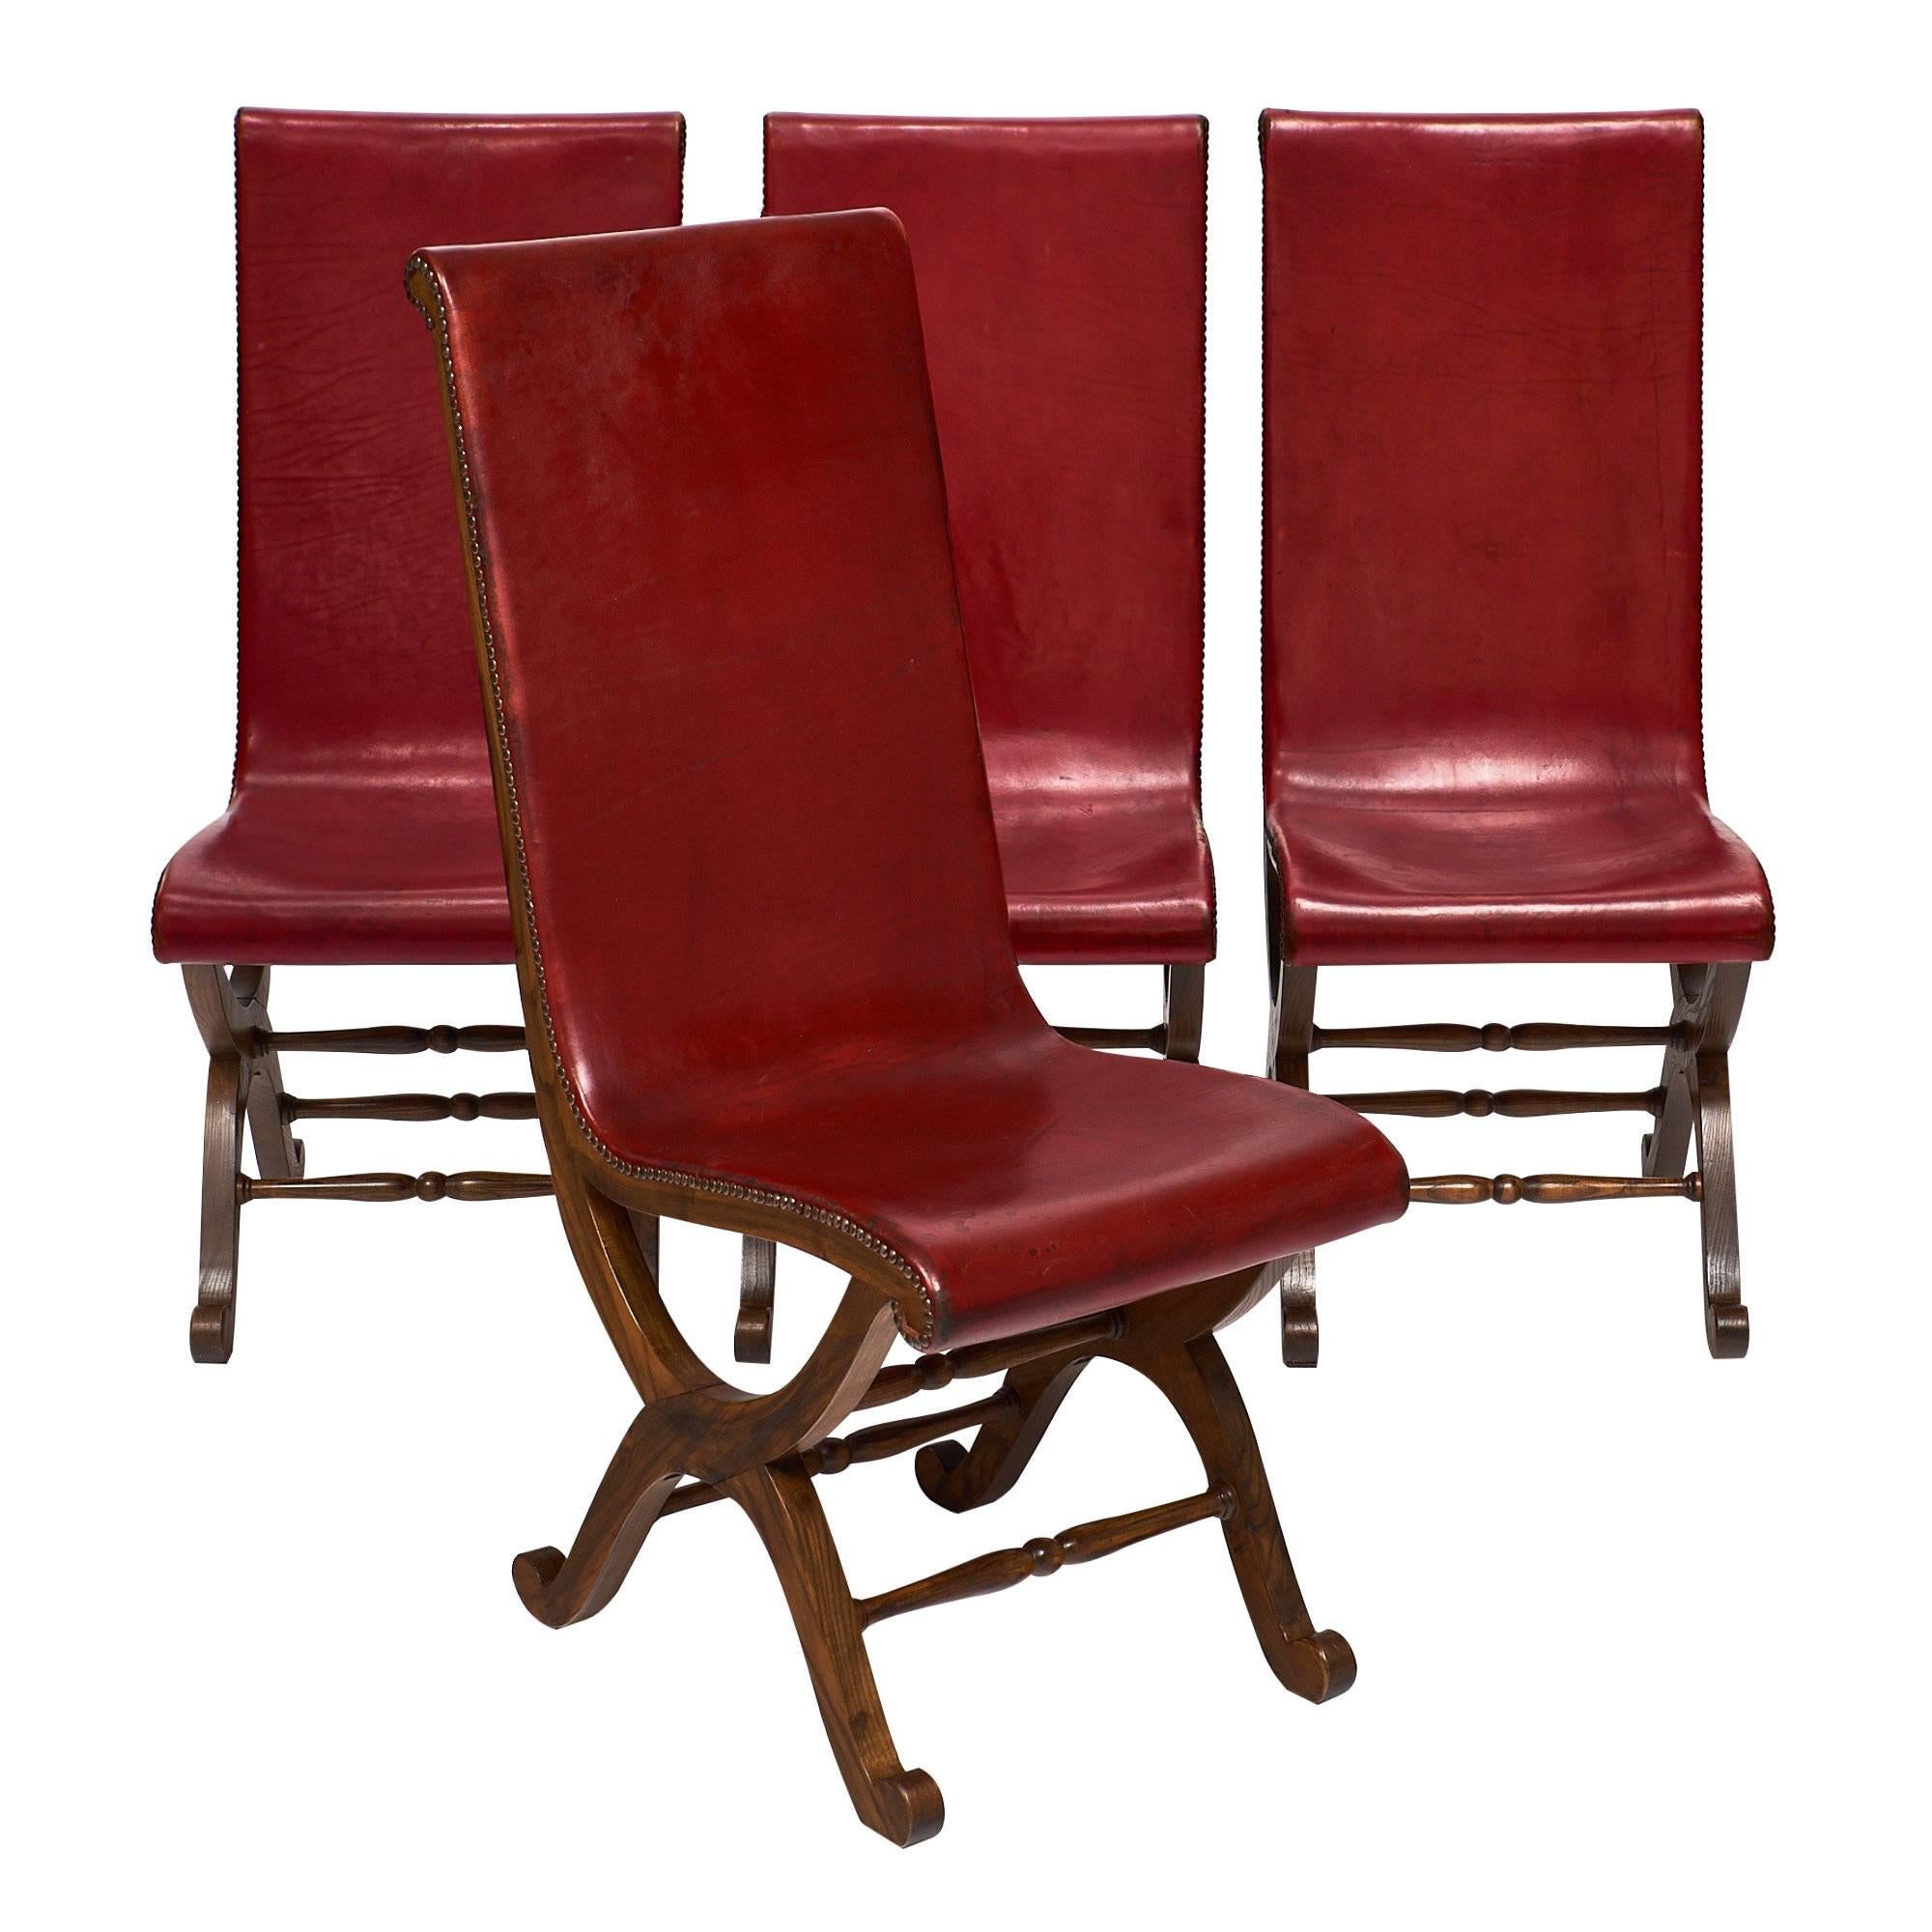 Set of Four Crimson Leather Valenti Chairs